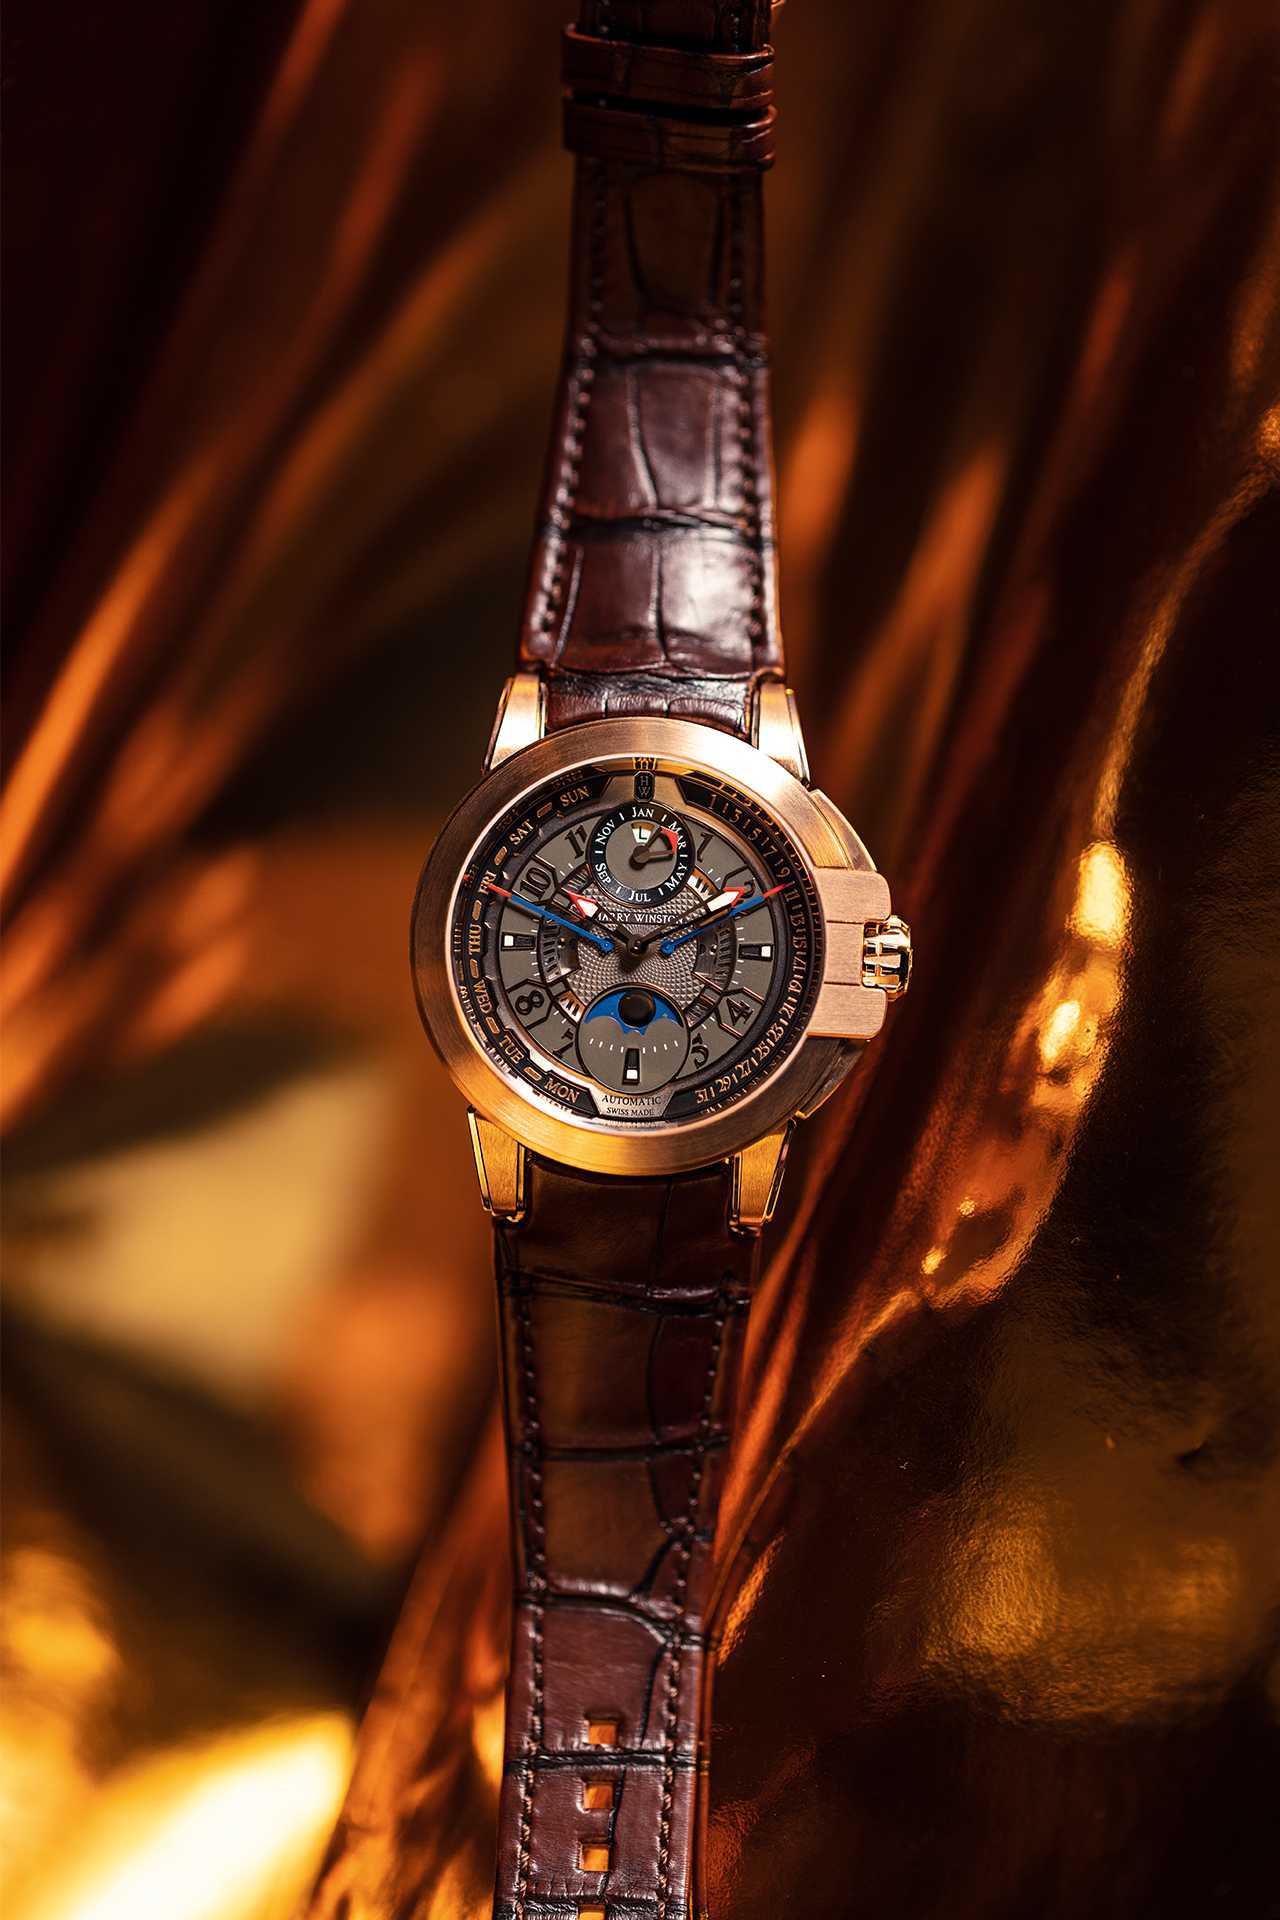 Harry Winston Ocean Biretrograde Perpetual Calendar - best gold watches 2018